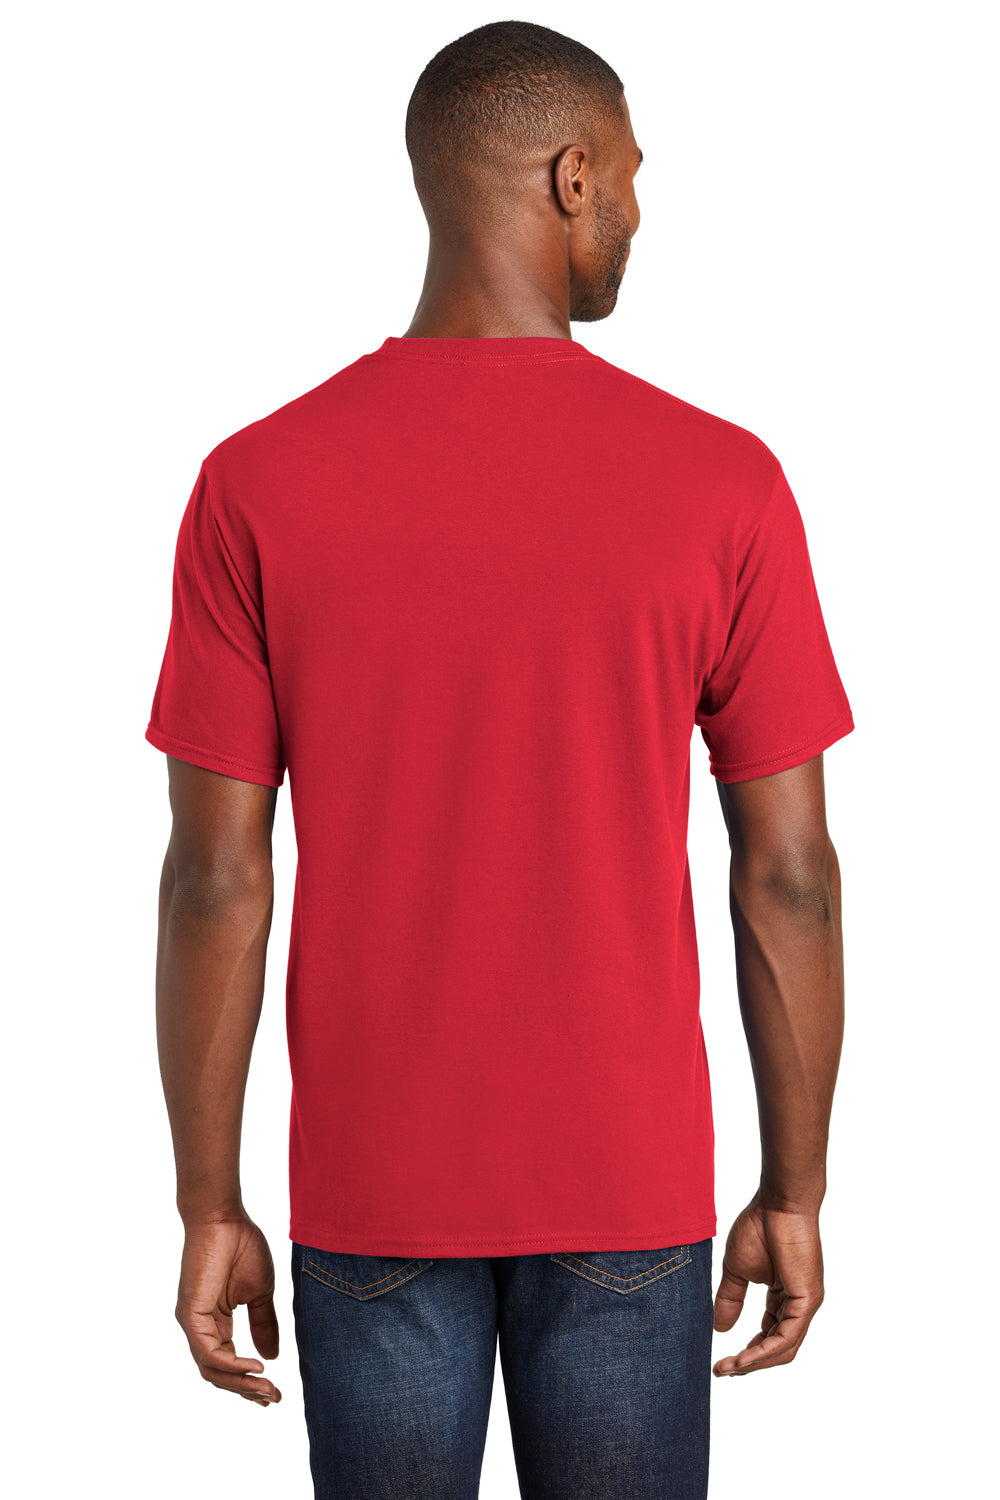 Port & Company PC450 Mens Fan Favorite Short Sleeve Crewneck T-Shirt Athletic Red Back